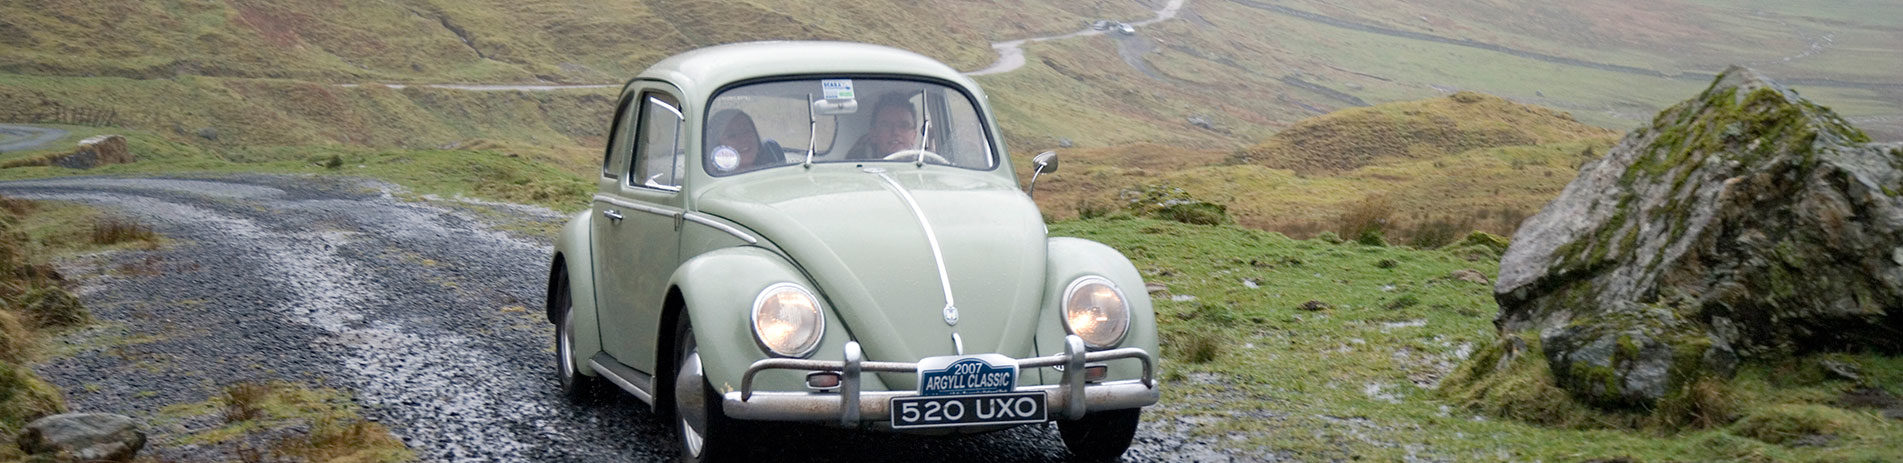 argyll-classic-car-on-narrow-track